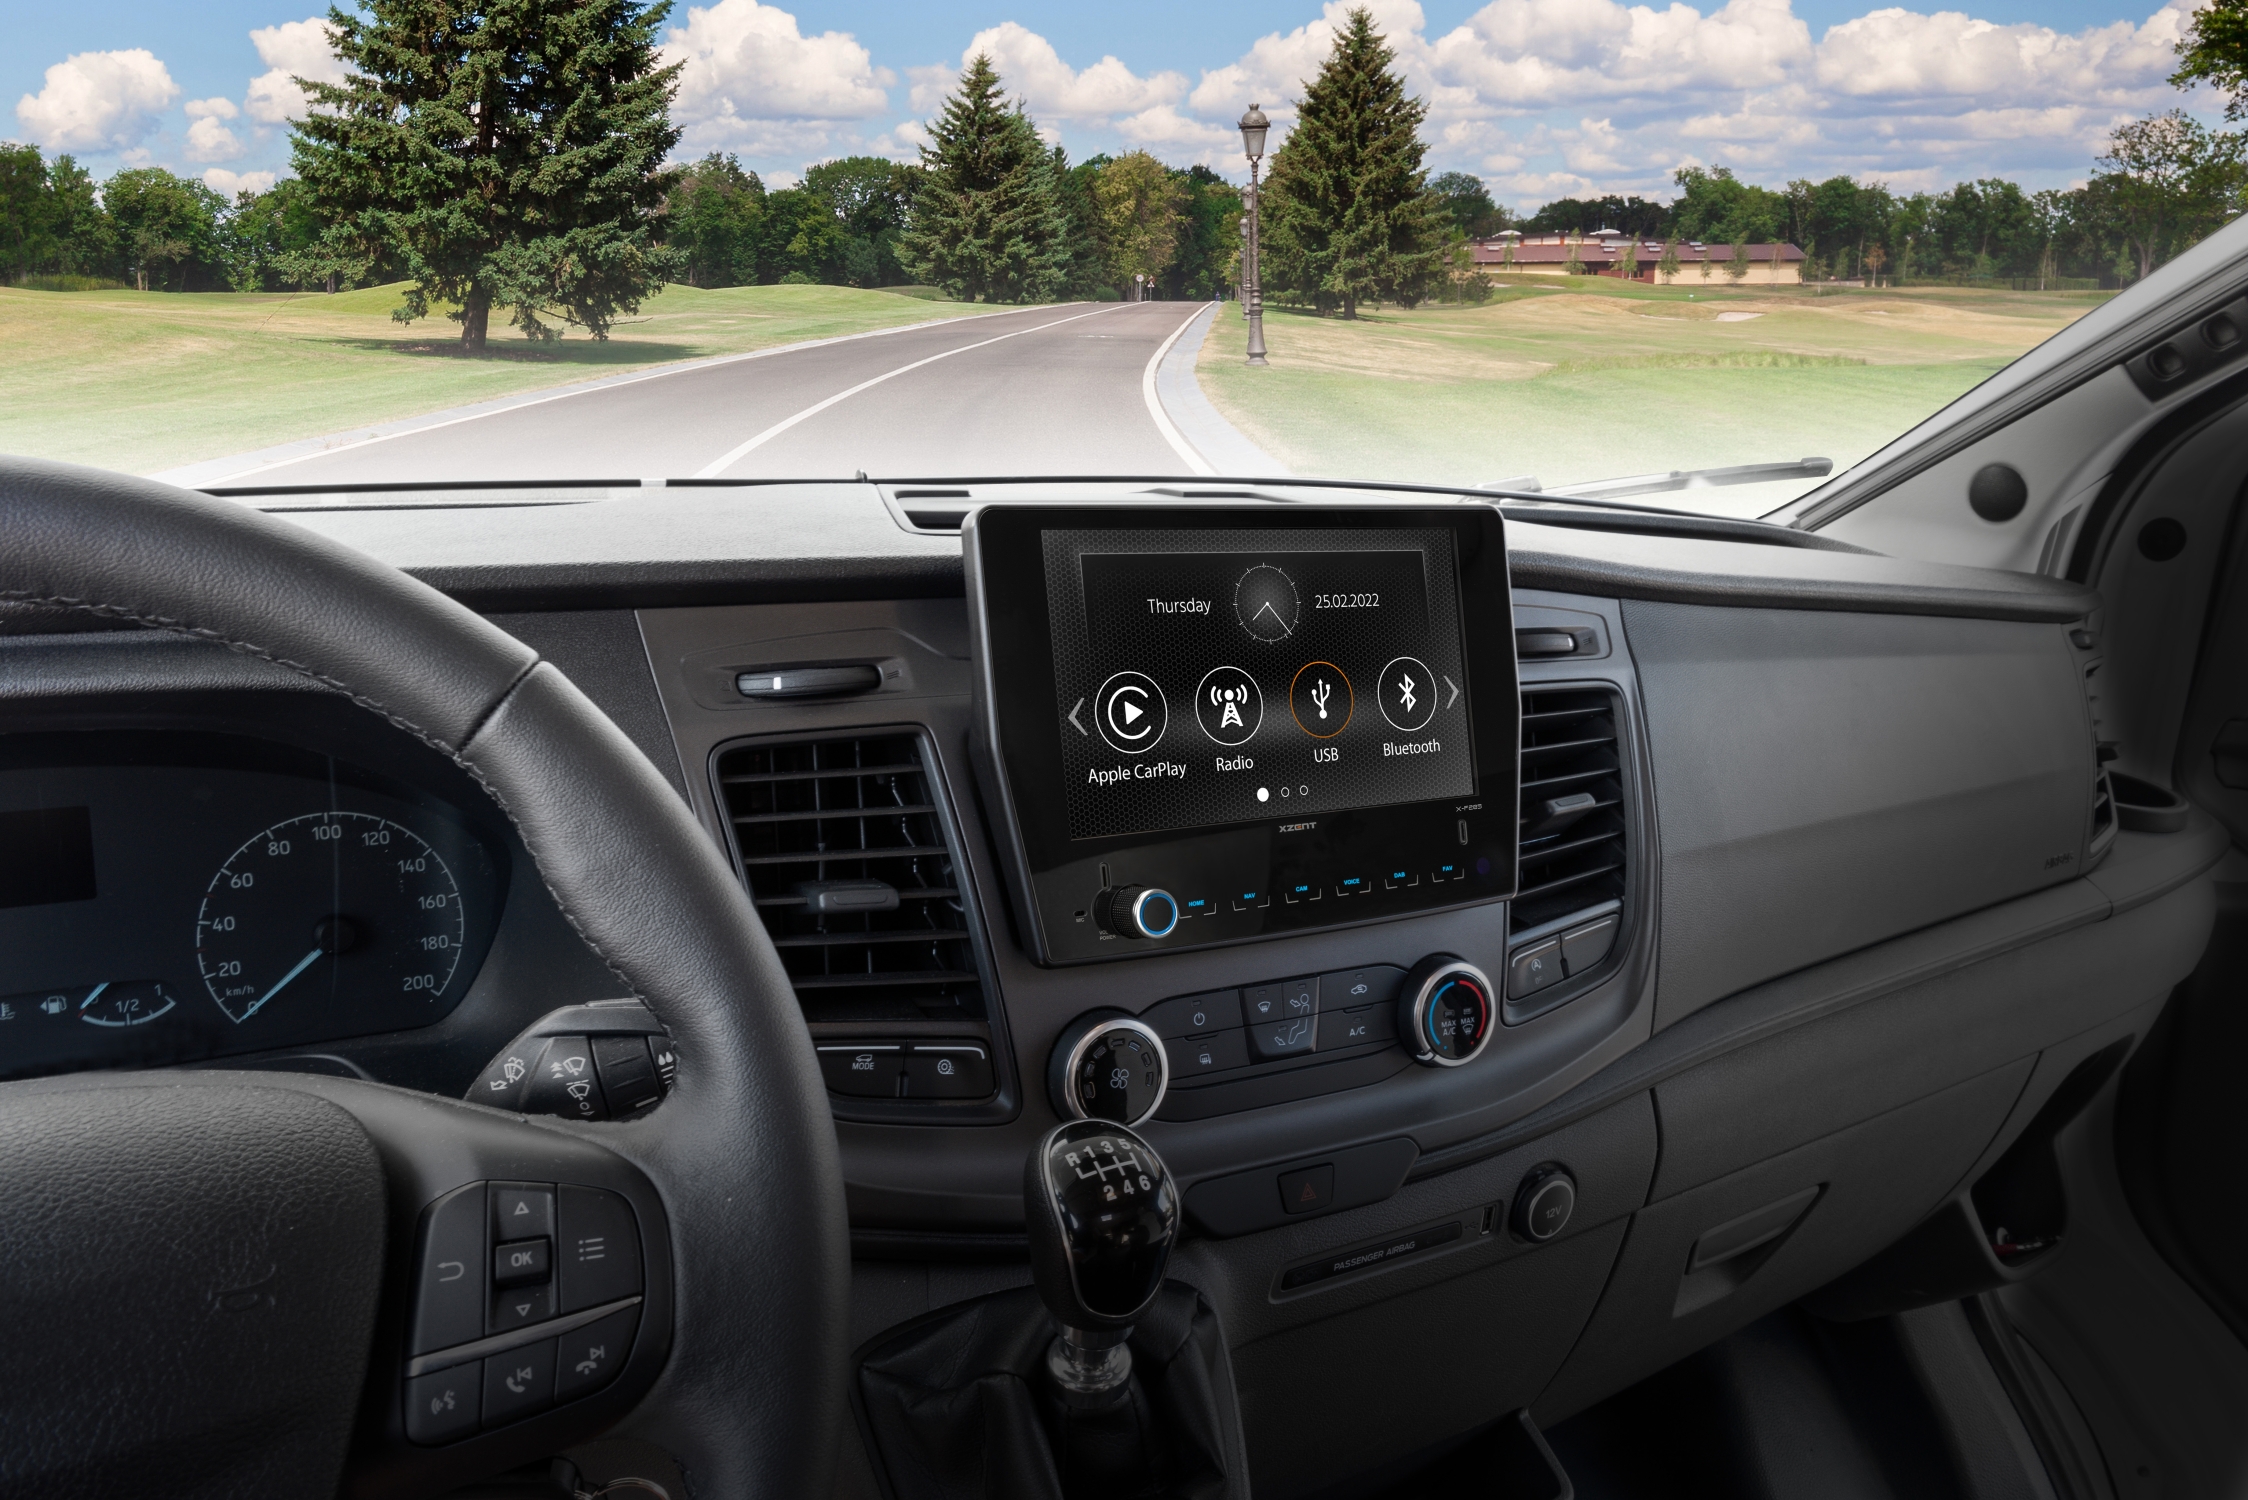 XZENT X-F285 pro Ford Transit Autorádio s Apple CarPlay a AndroidLink